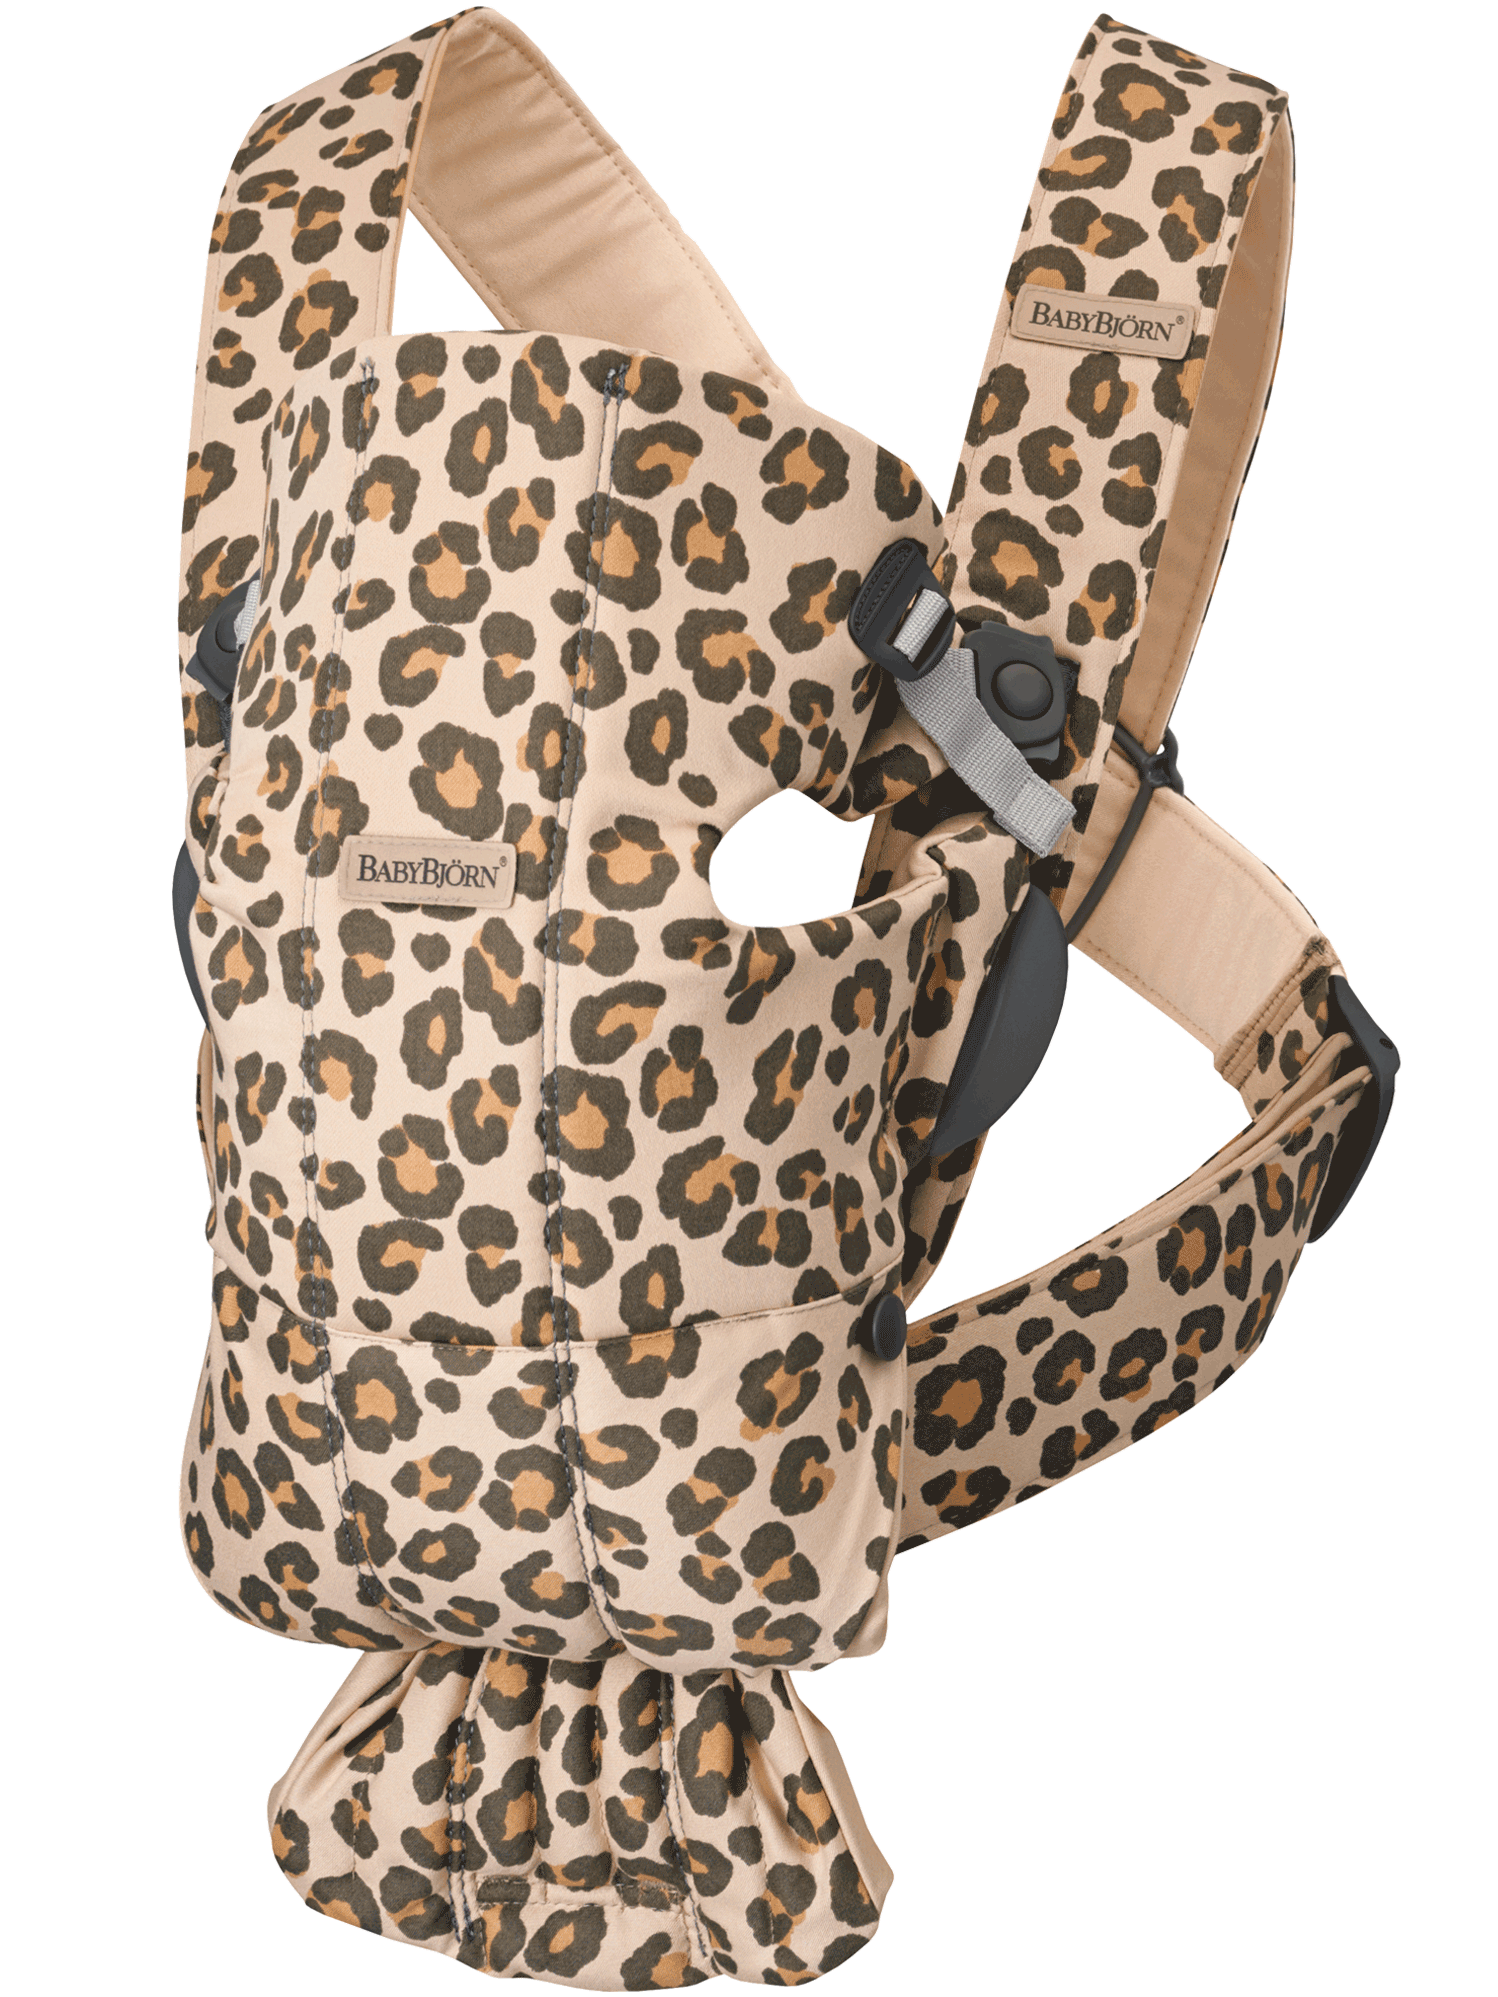 BabyBjorn Baby Carrier Mini, Cotton, Beige/Leopard - image 1 of 6